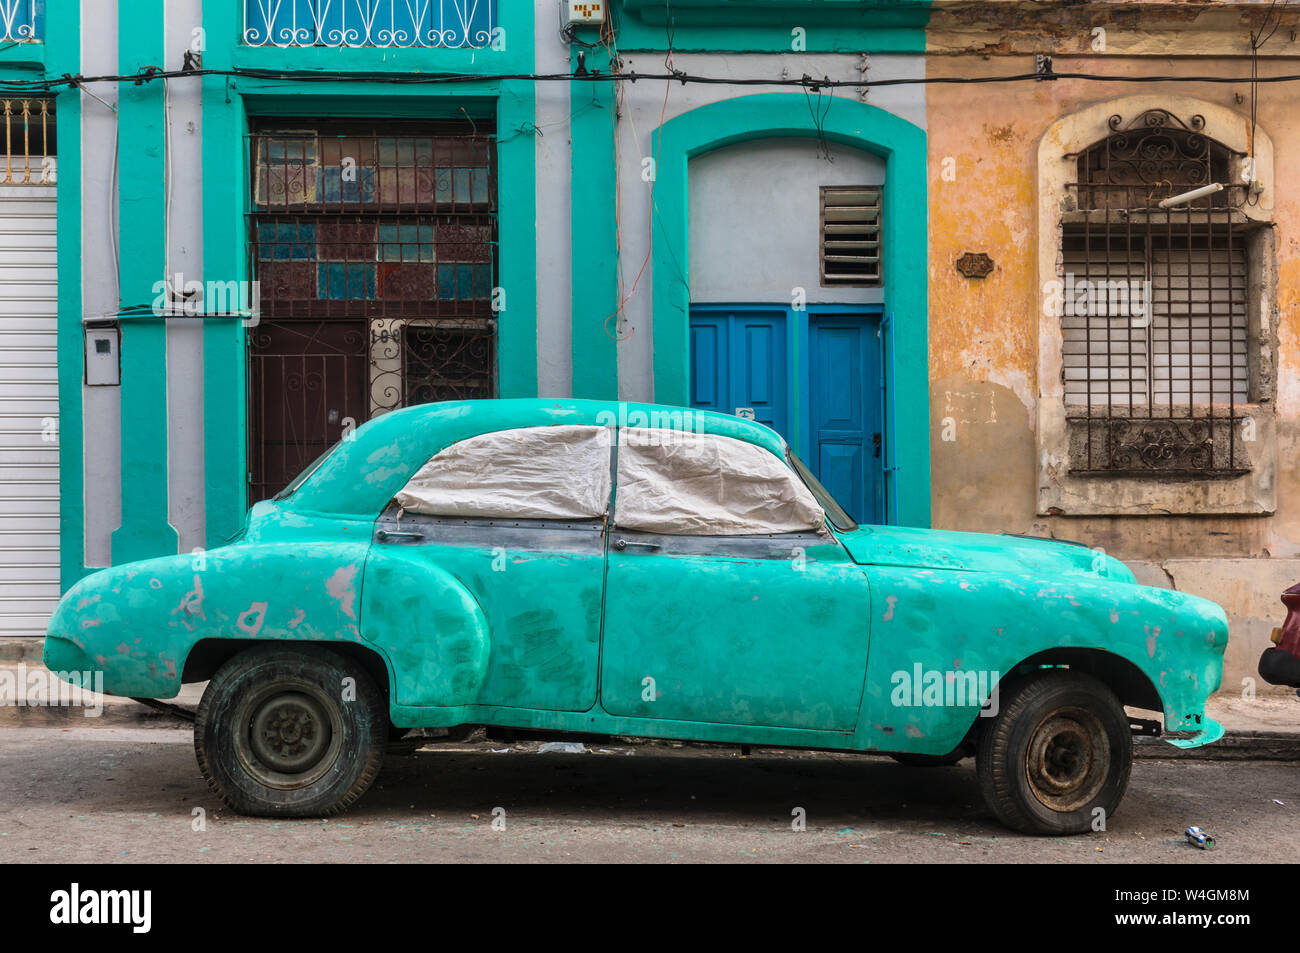 Parked damaged vintage car, Havana, Cuba Stock Photo